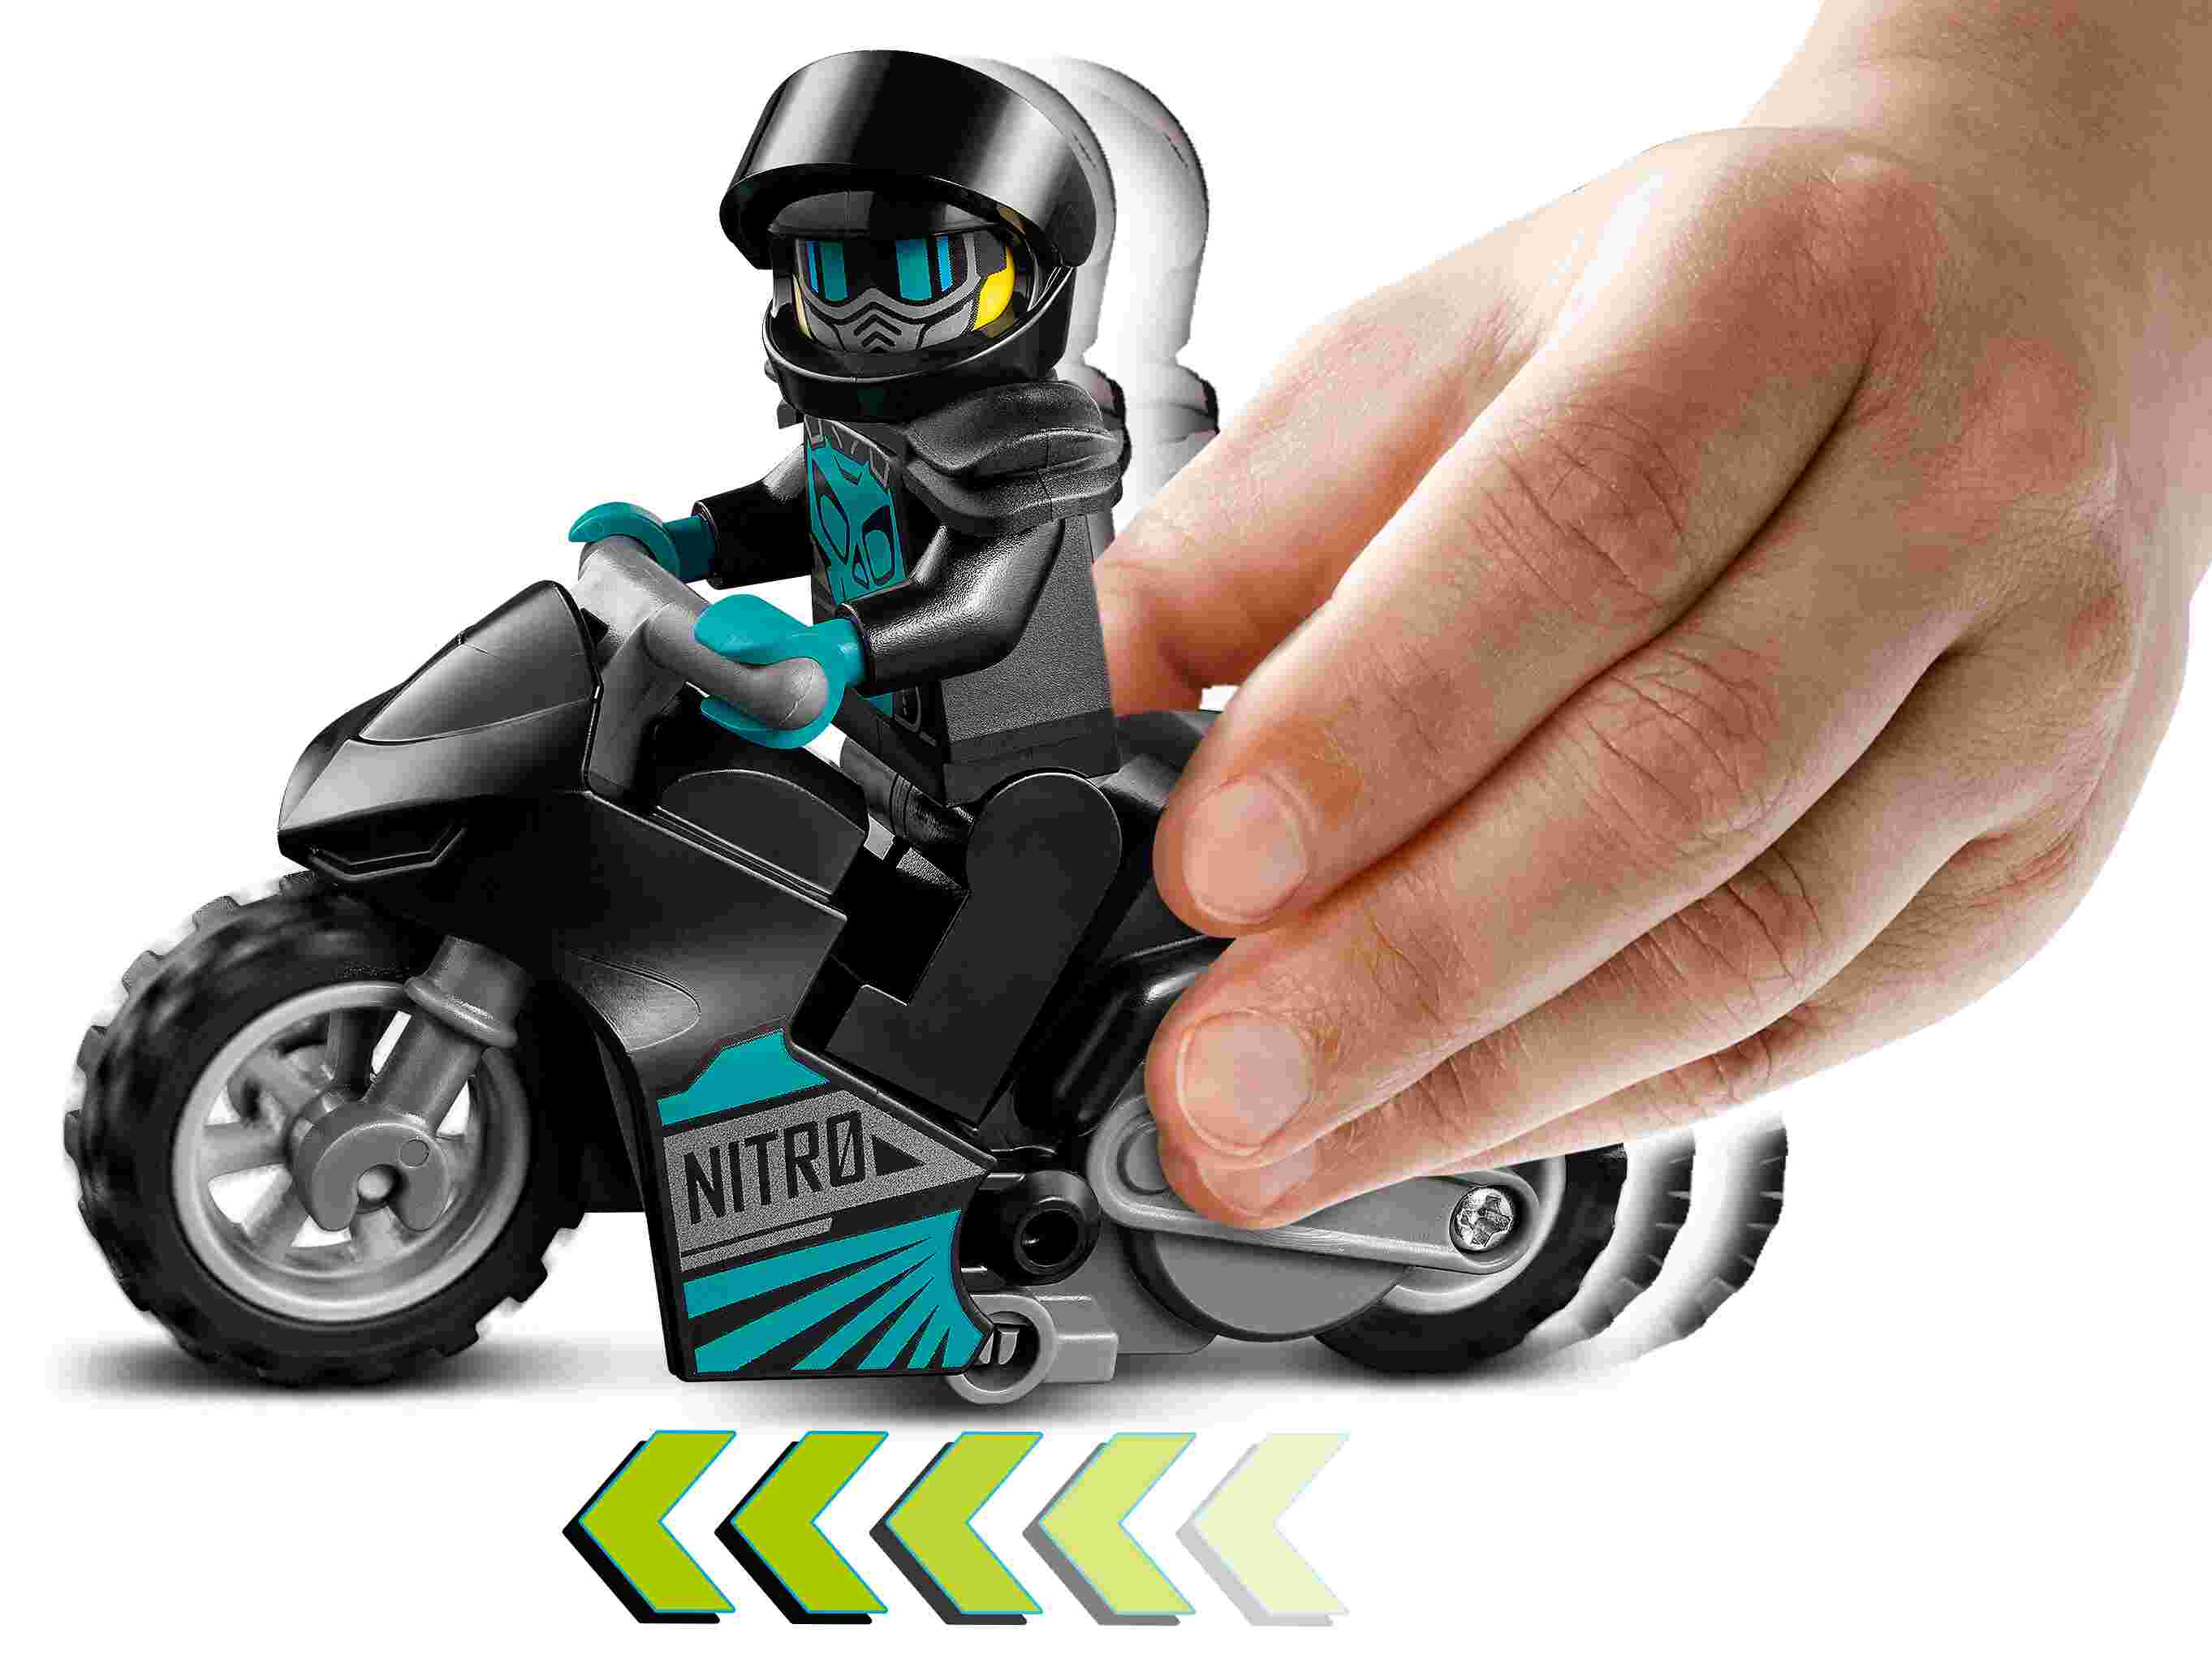 LEGO 60294 City Stuntz Stuntshow-Truck, Stuntbike mit Schwungrad, 4 Minifiguren